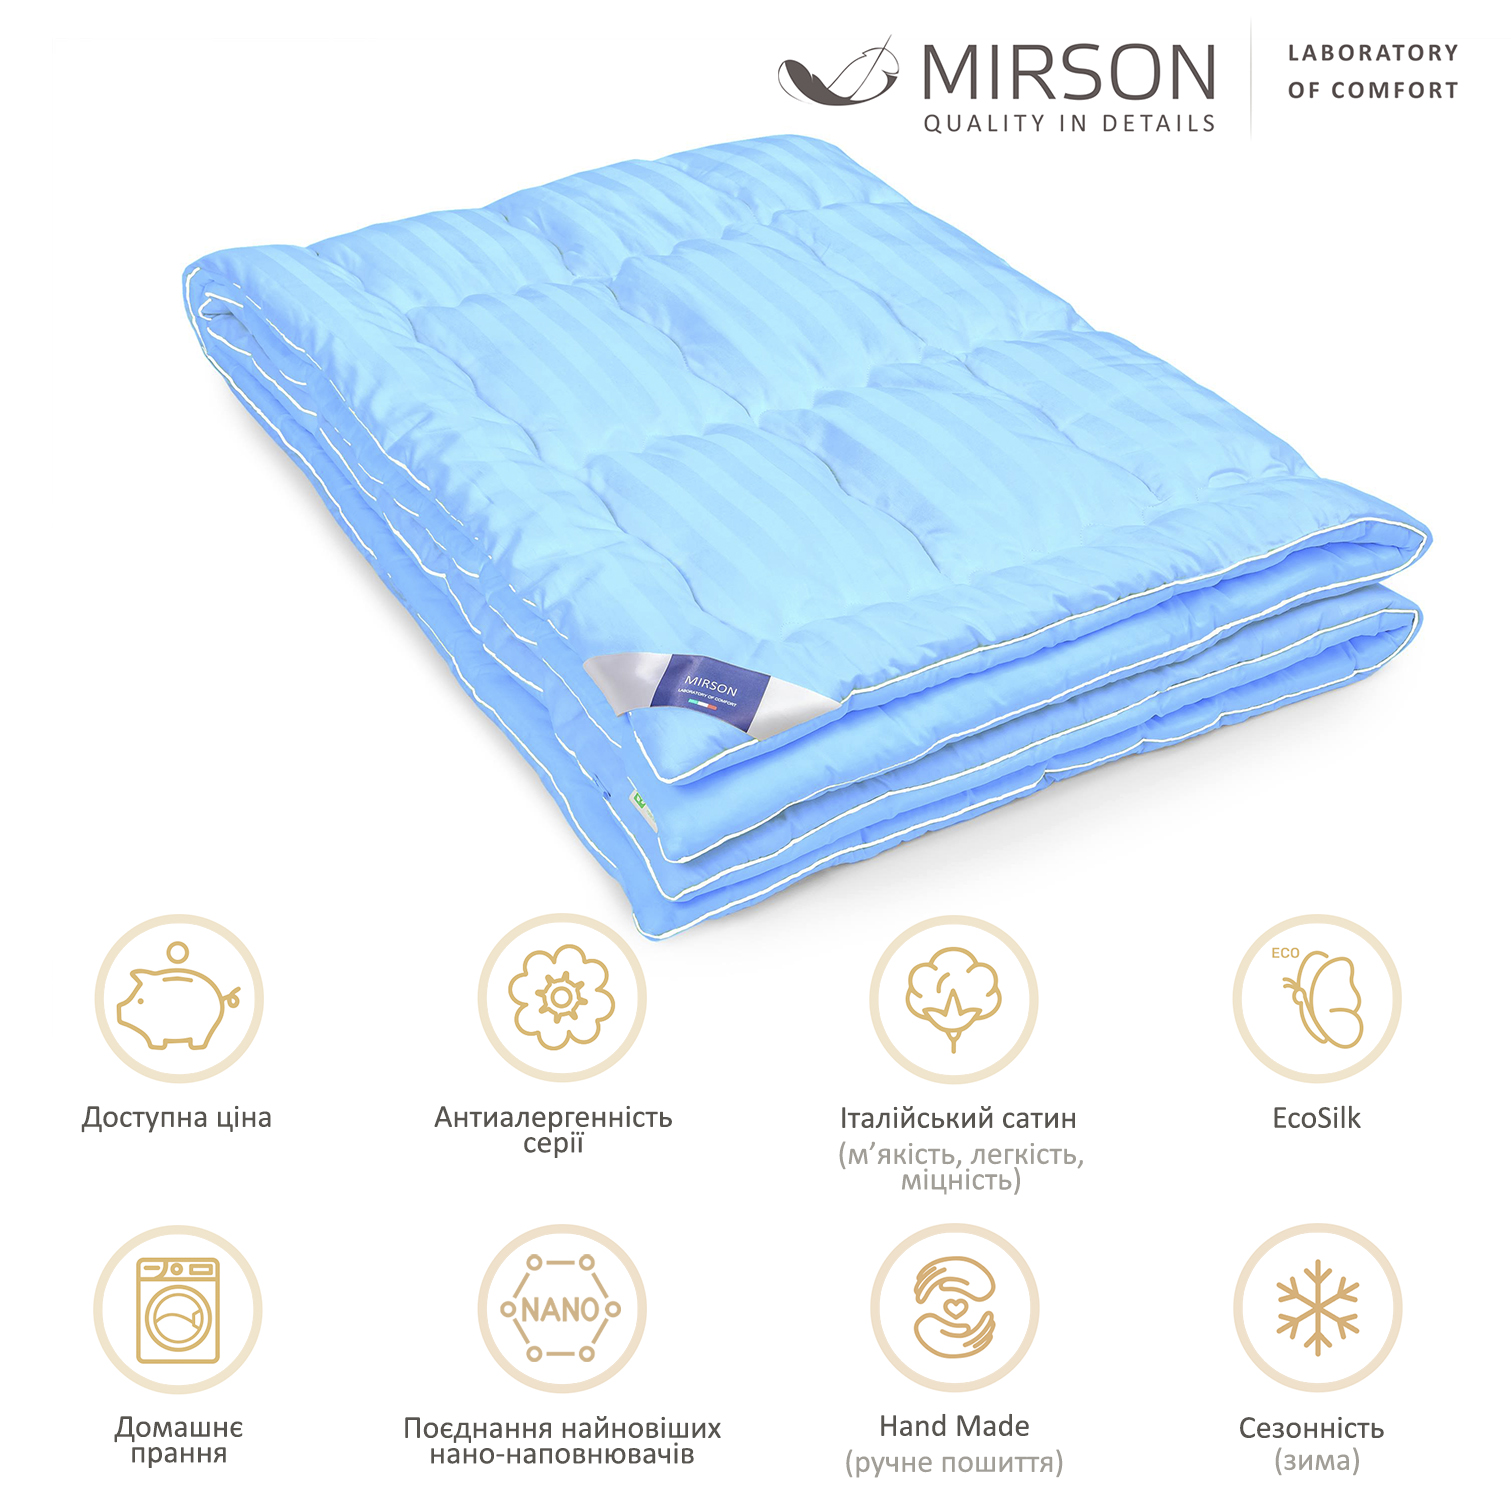 Одеяло антиаллергенное MirSon Valentino Premium Hand Made №067, зимнее, 140x205 см, голубое - фото 5